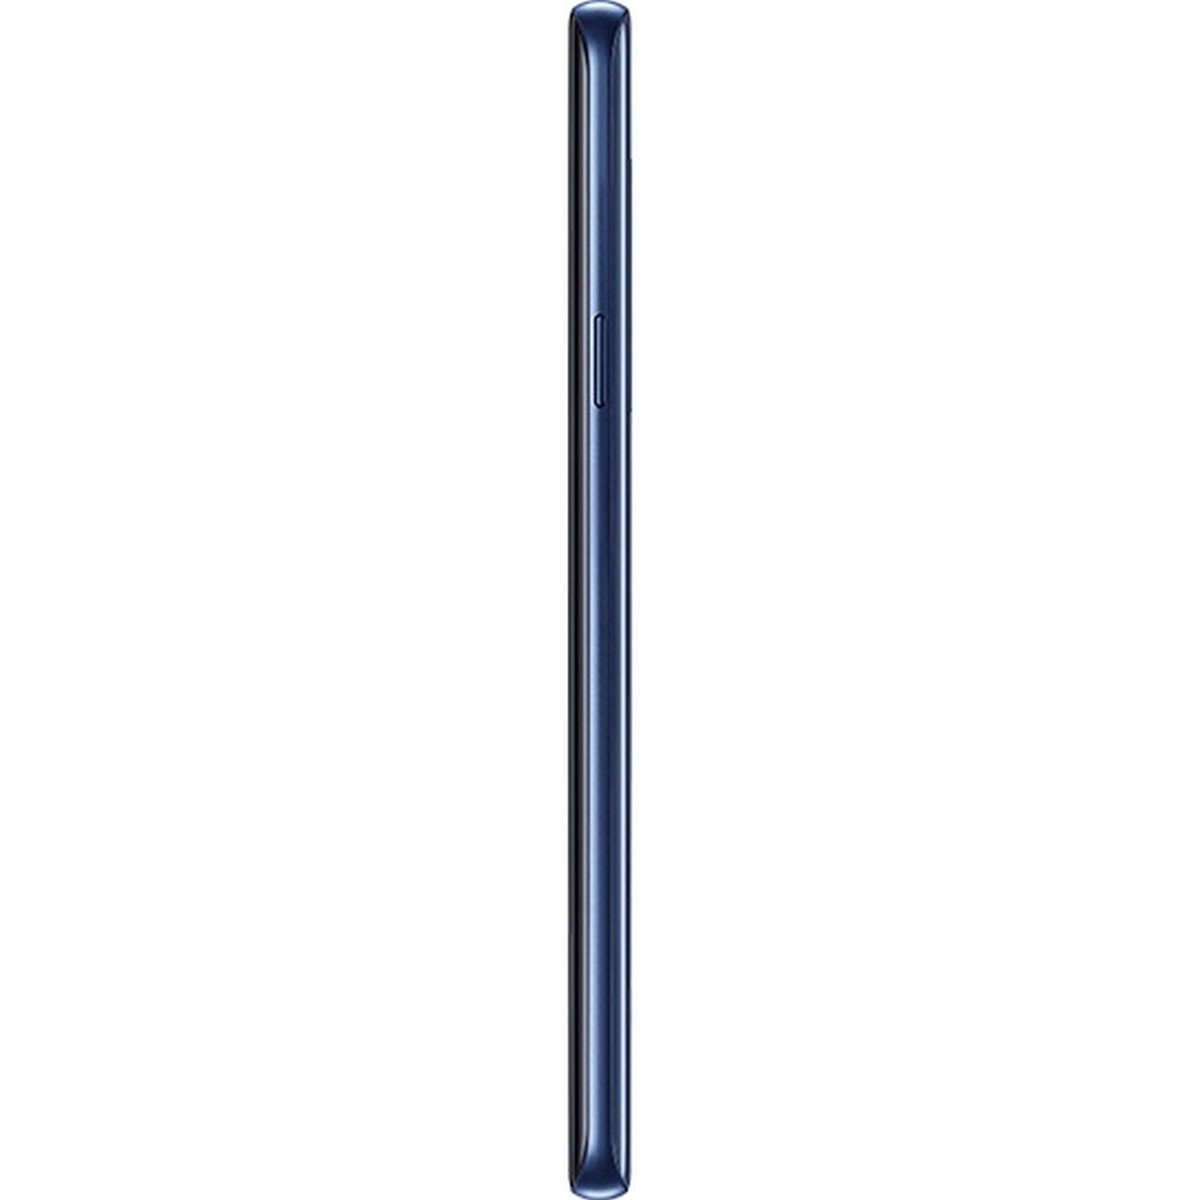 Samsung Galaxy S9+ SMG965 256GB 4G Coral Blue